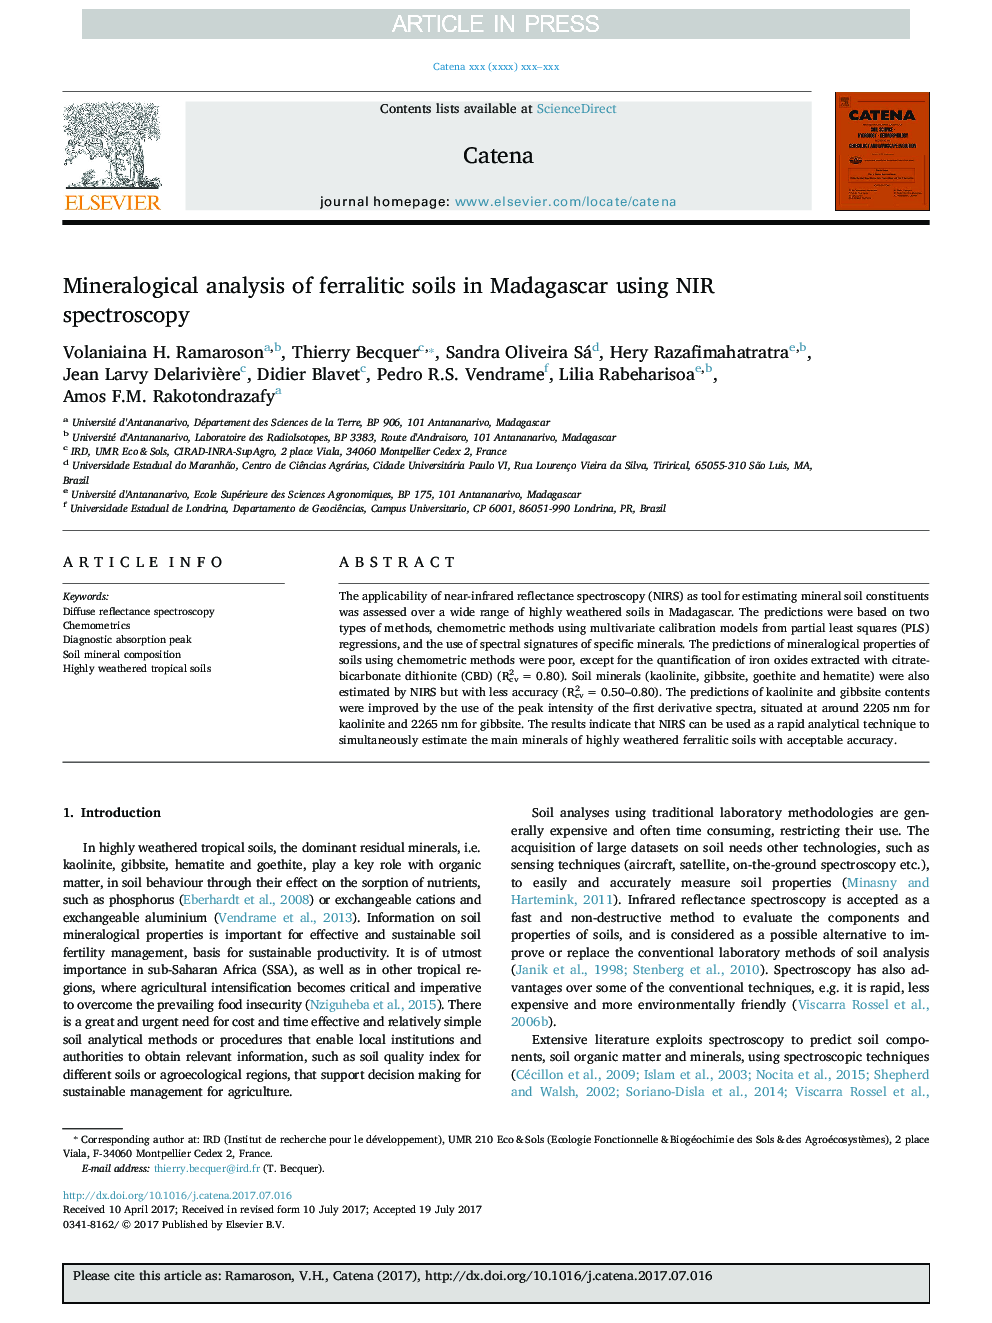 Mineralogical analysis of ferralitic soils in Madagascar using NIR spectroscopy